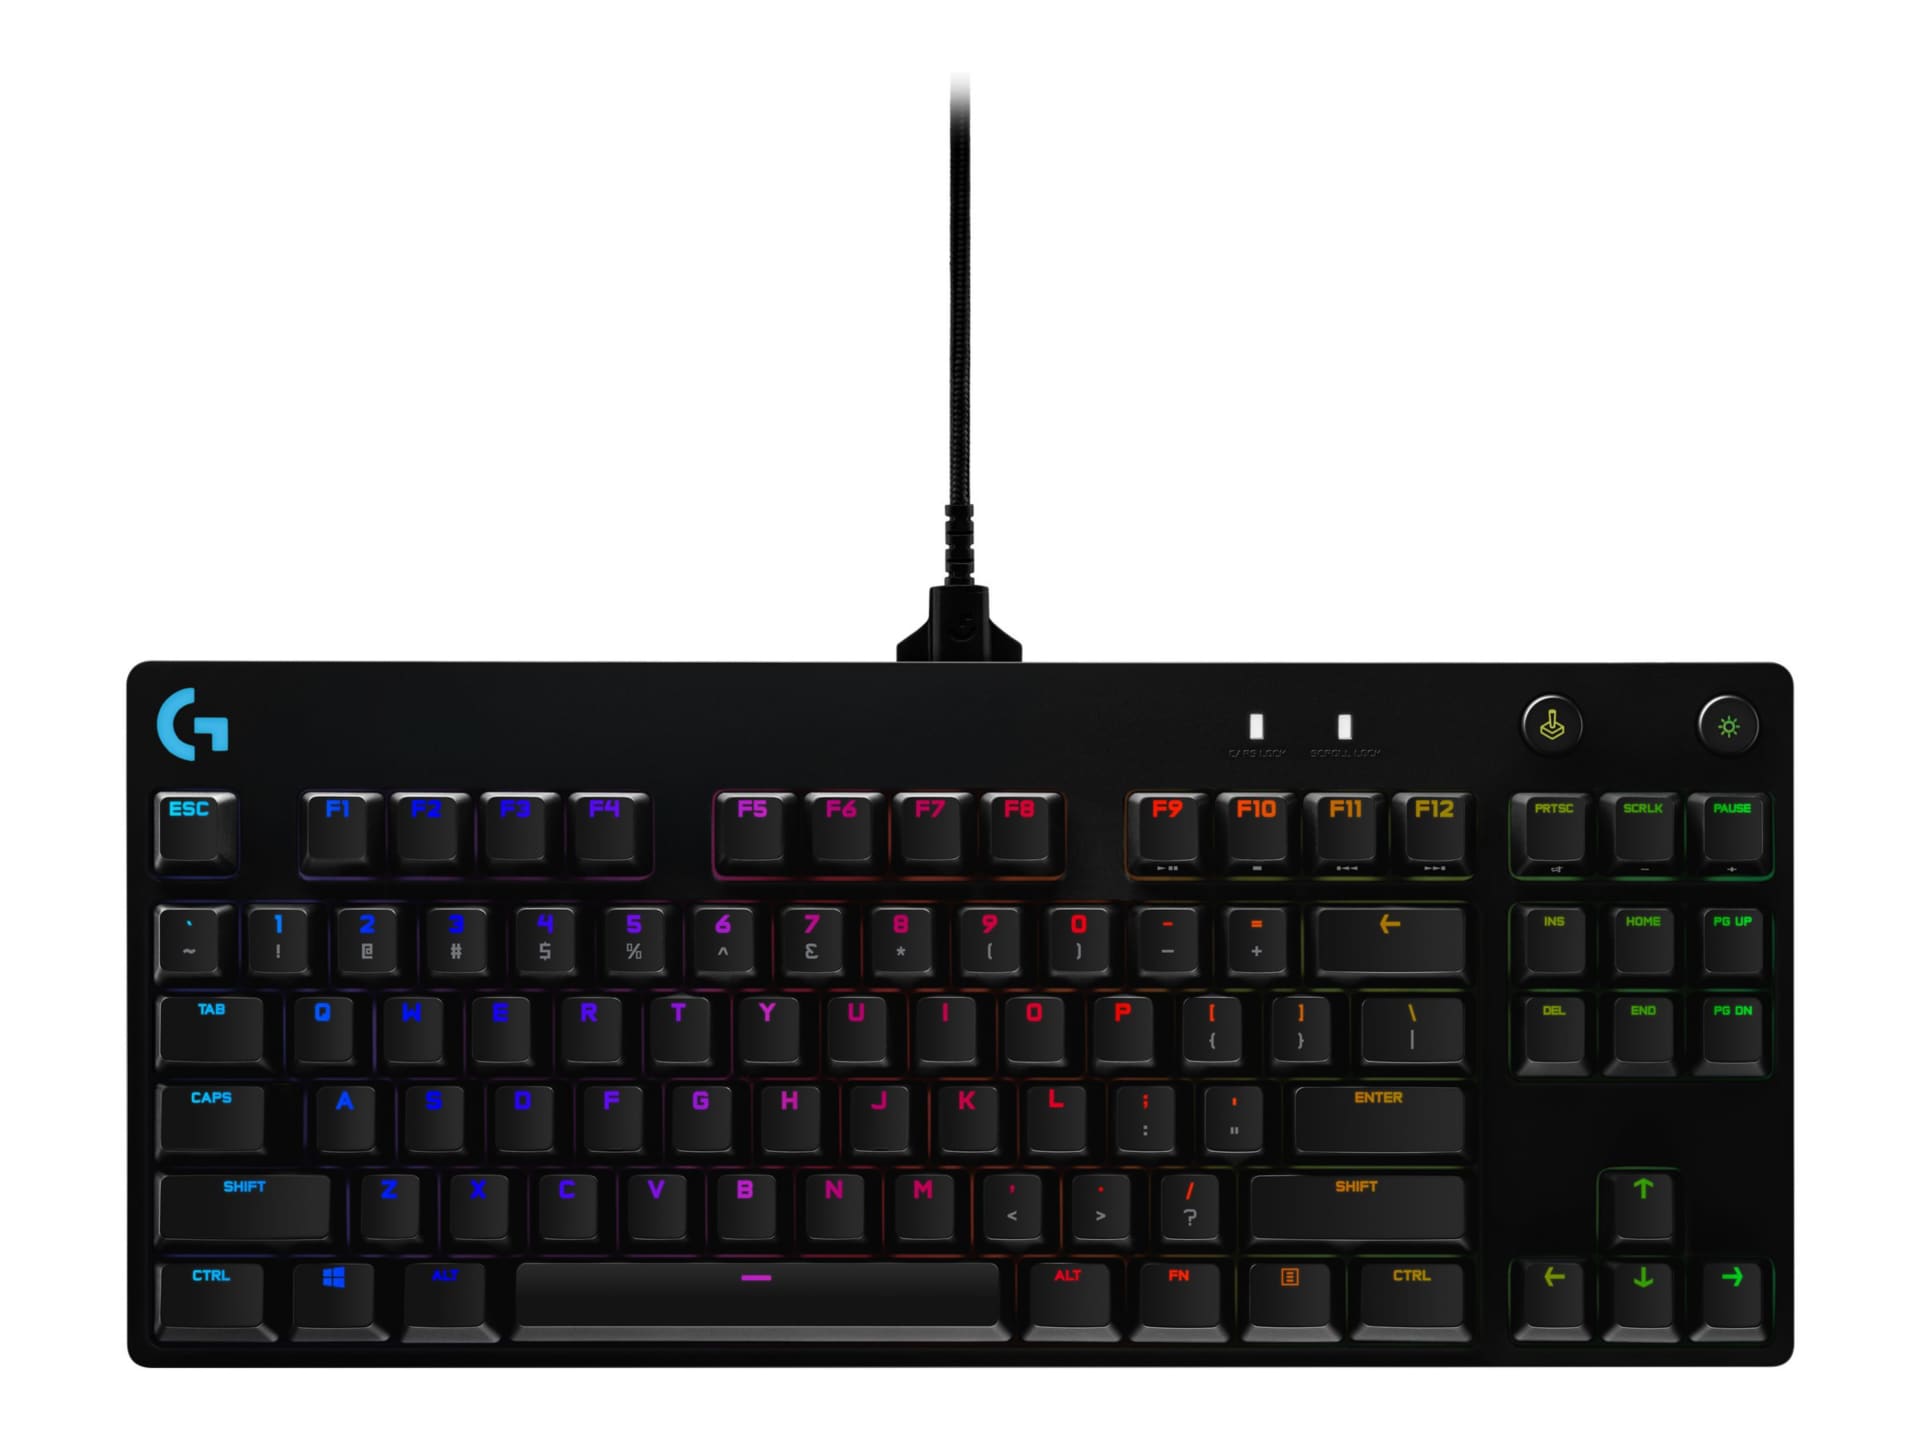 Logitech Pro Mechanical Gaming Keyboard - keyboard - black - 920-009388 - Keyboards - CDW.com